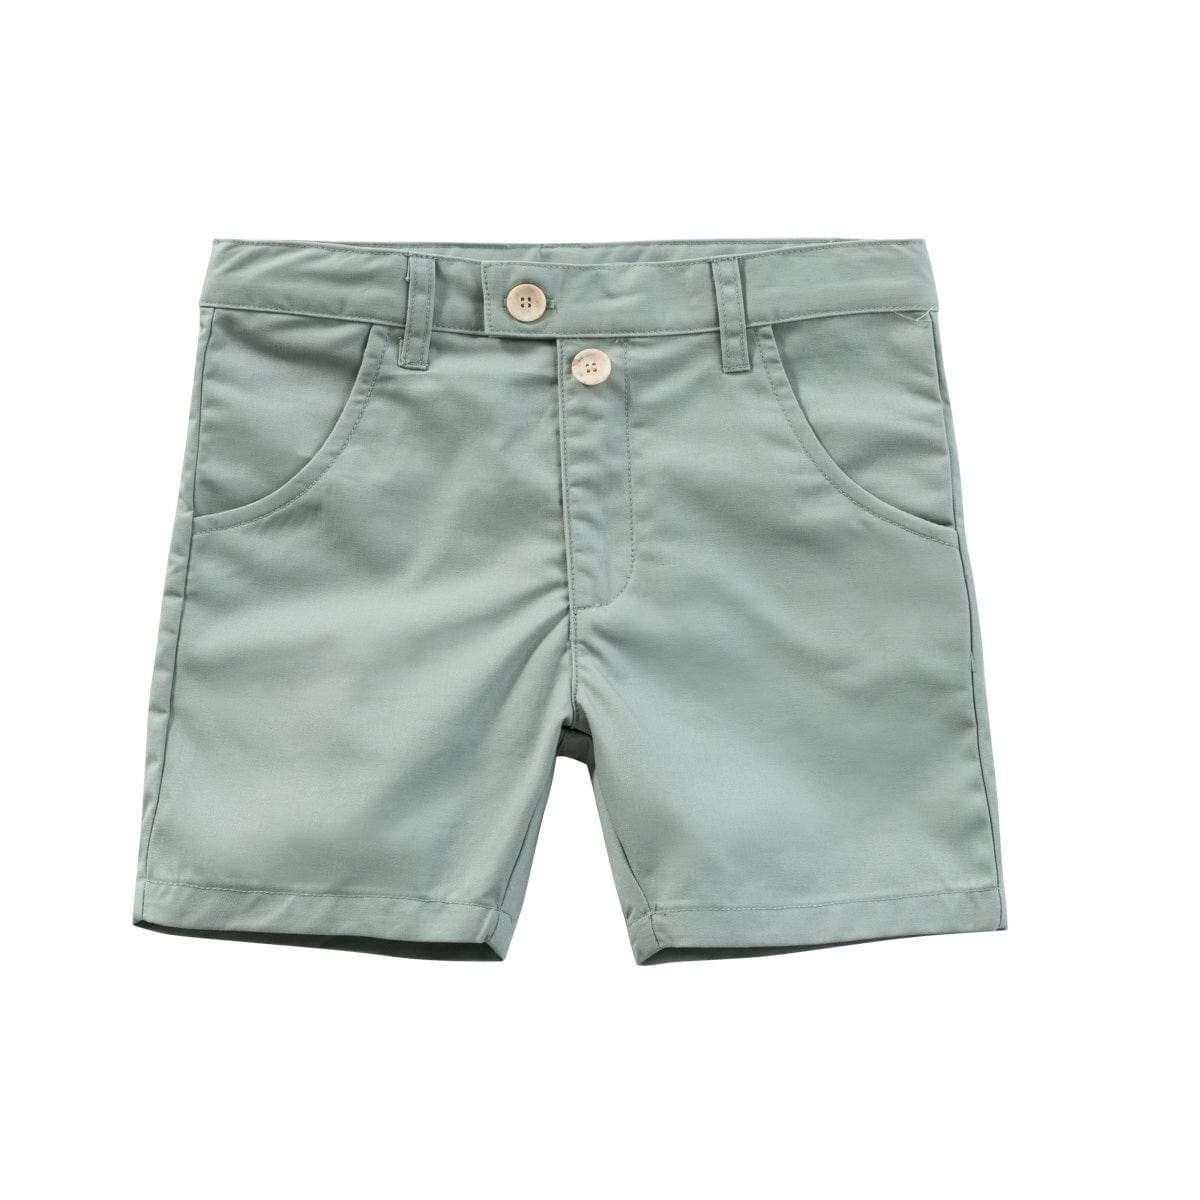 100% Cotton Girls Safety Pants Top Quality Kids Short Pants Underwear  Children Summer Cute Shorts